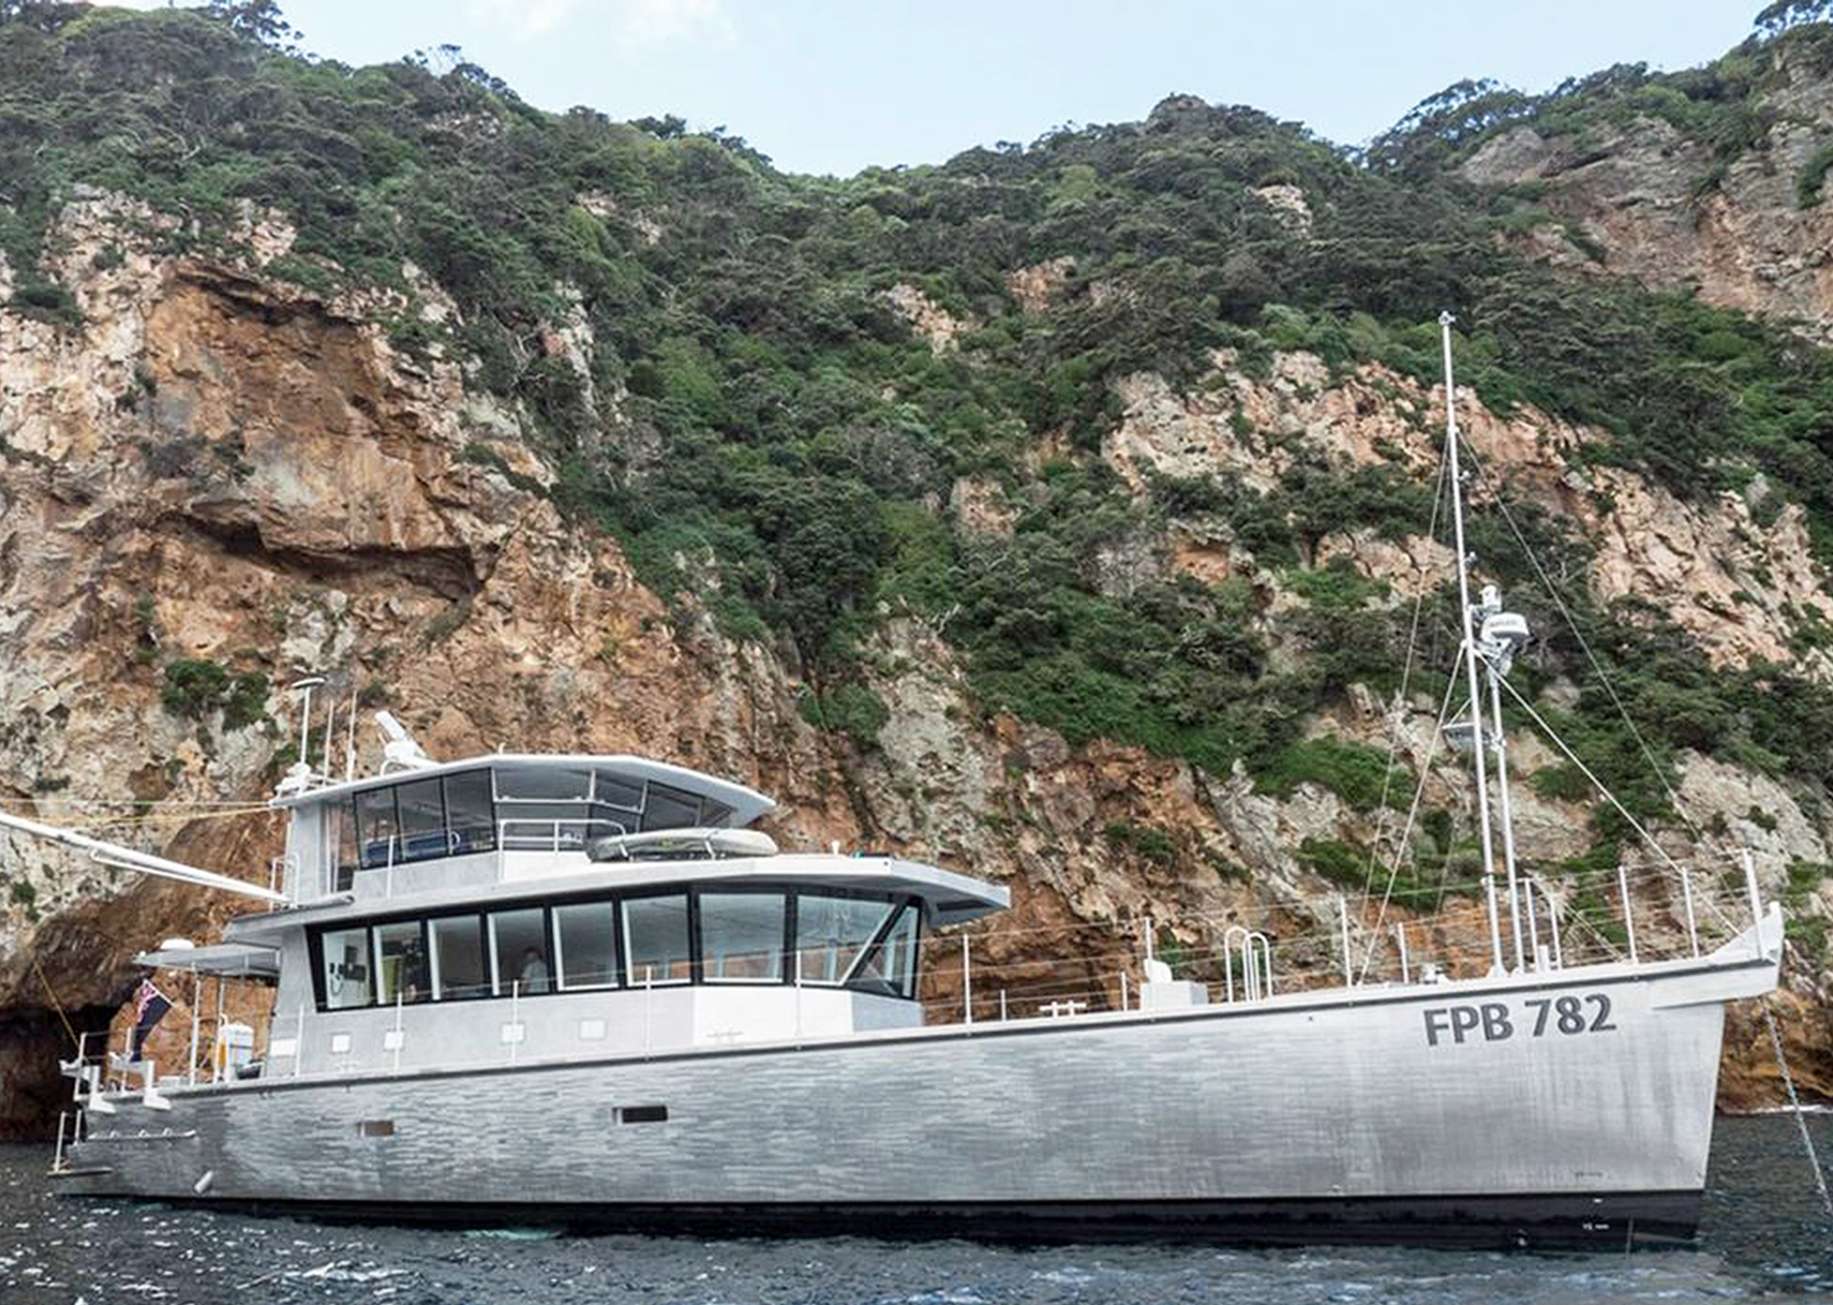 Motor Yacht 'GREY WOLF', 7 PAX, 3 Crew, 78.00 Ft, 23.00 Meters, Built 2017, Custom